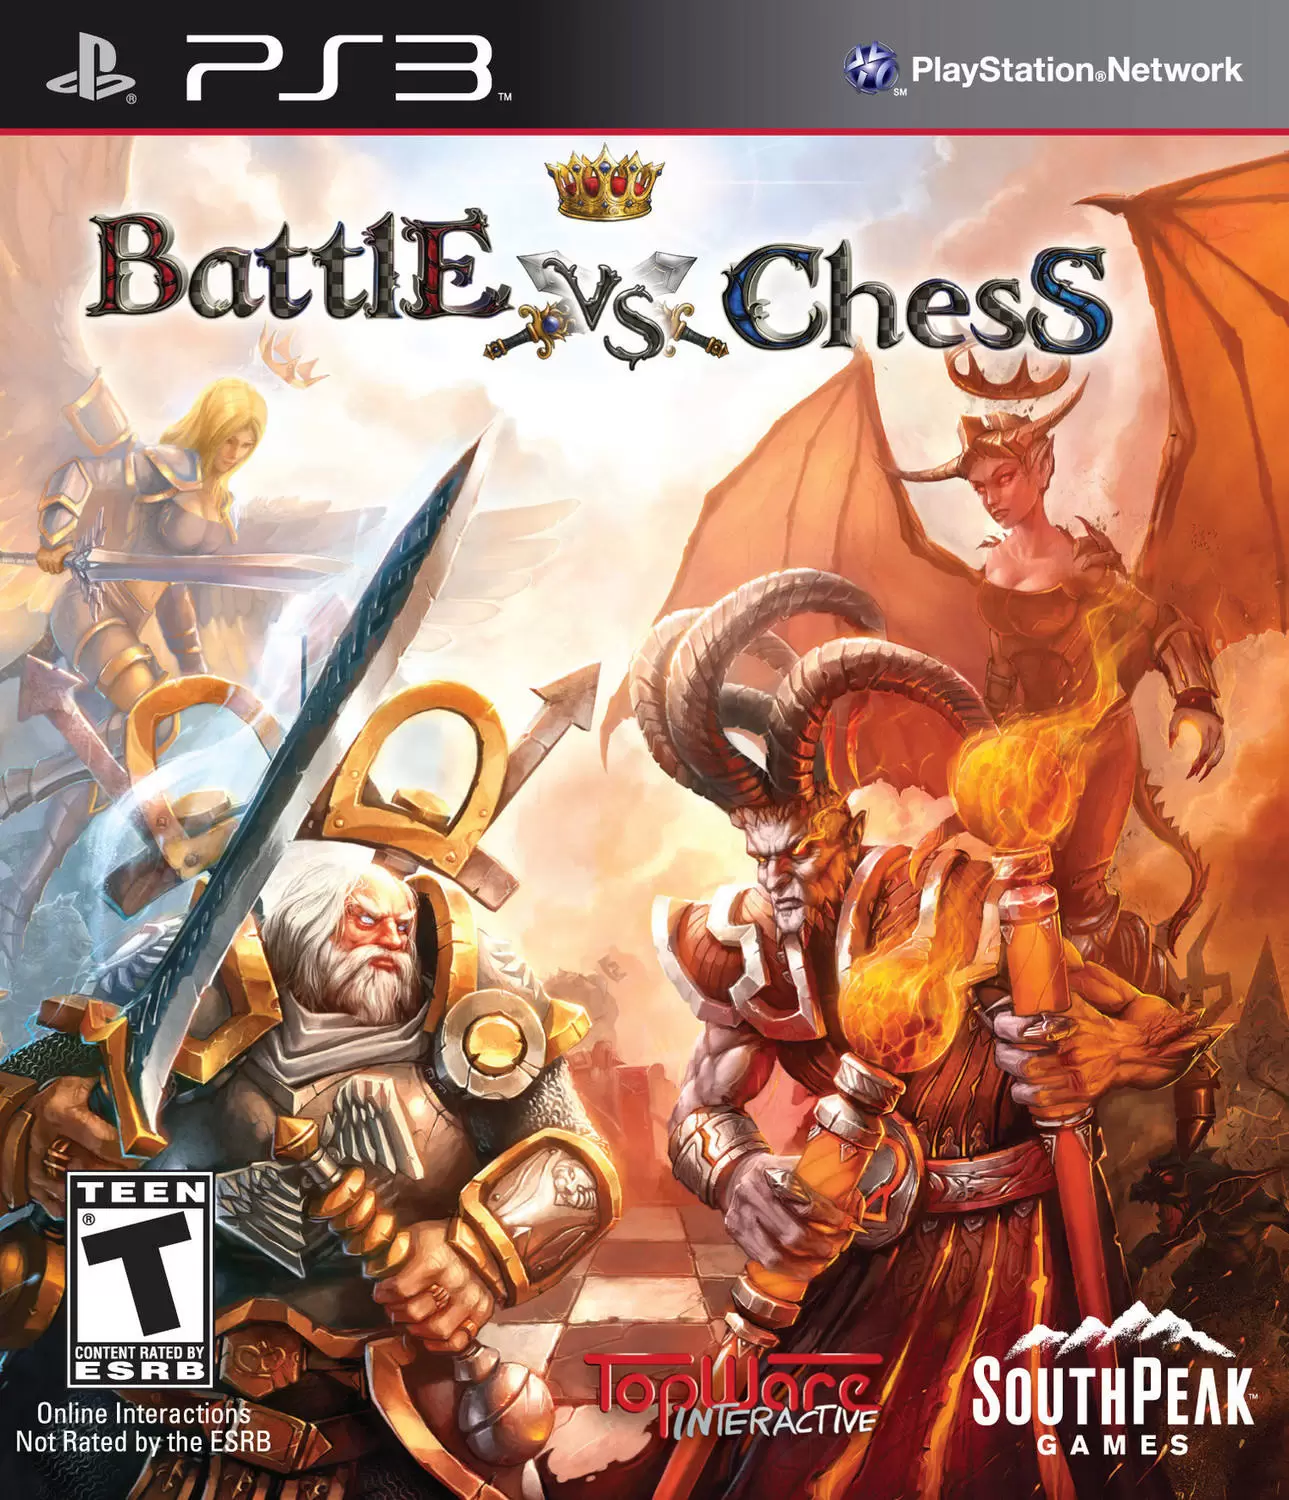 PS3 Games - Battle vs. Chess